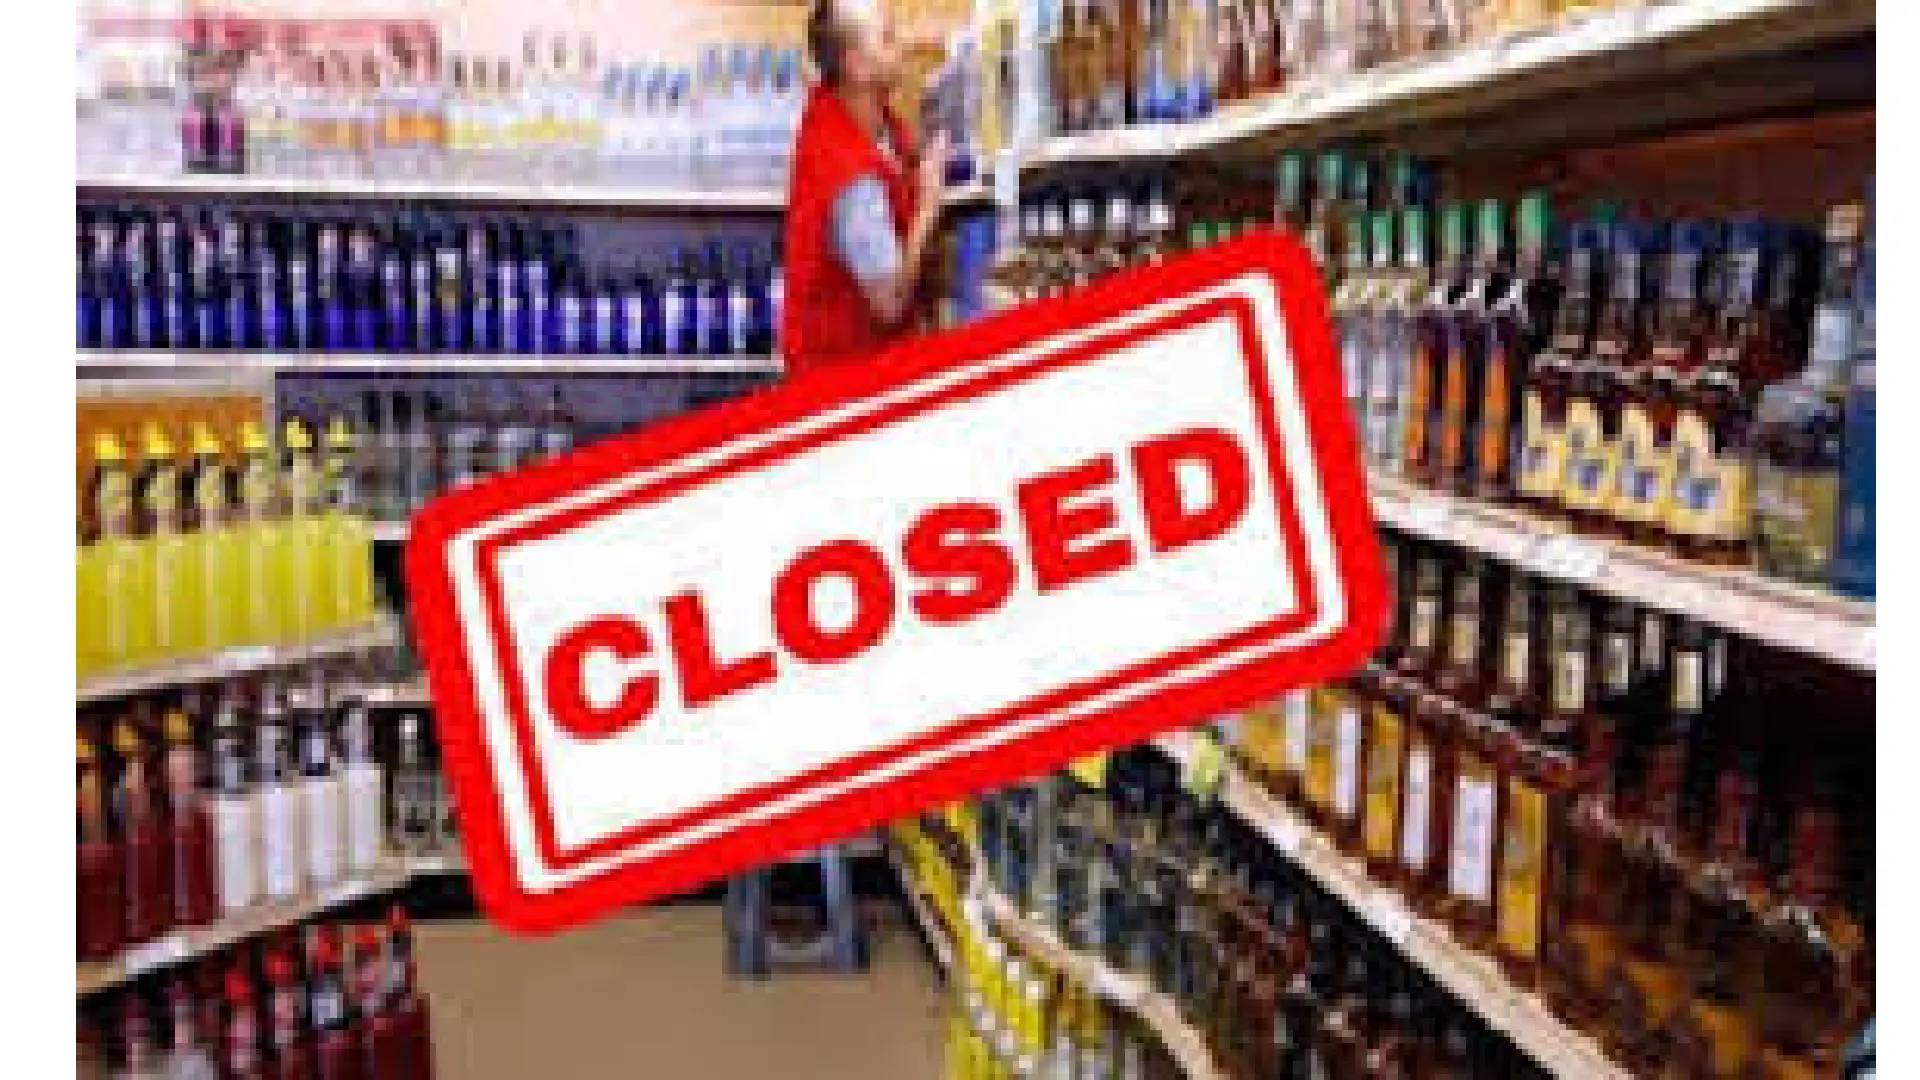 Wine Shops Closed